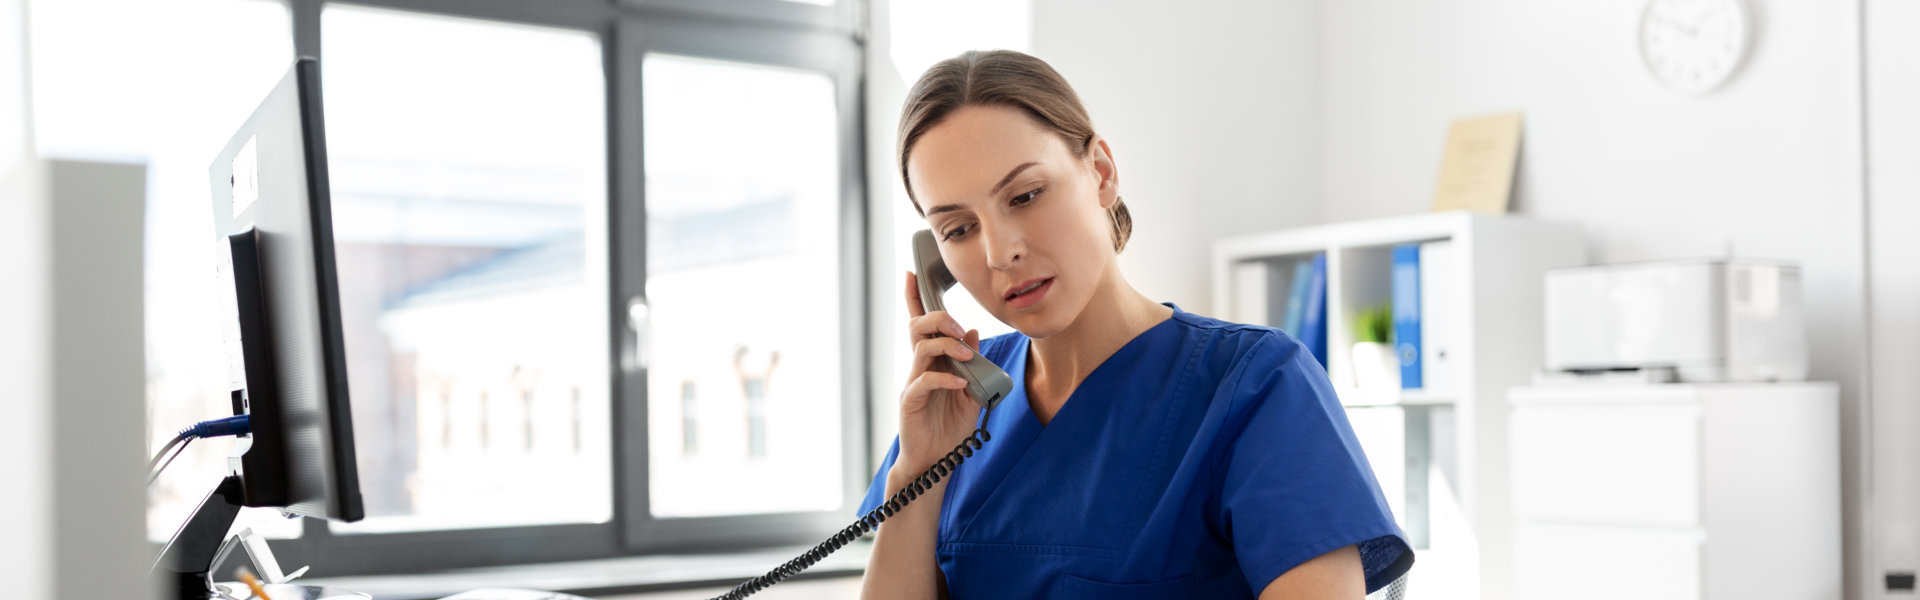 nurse calling